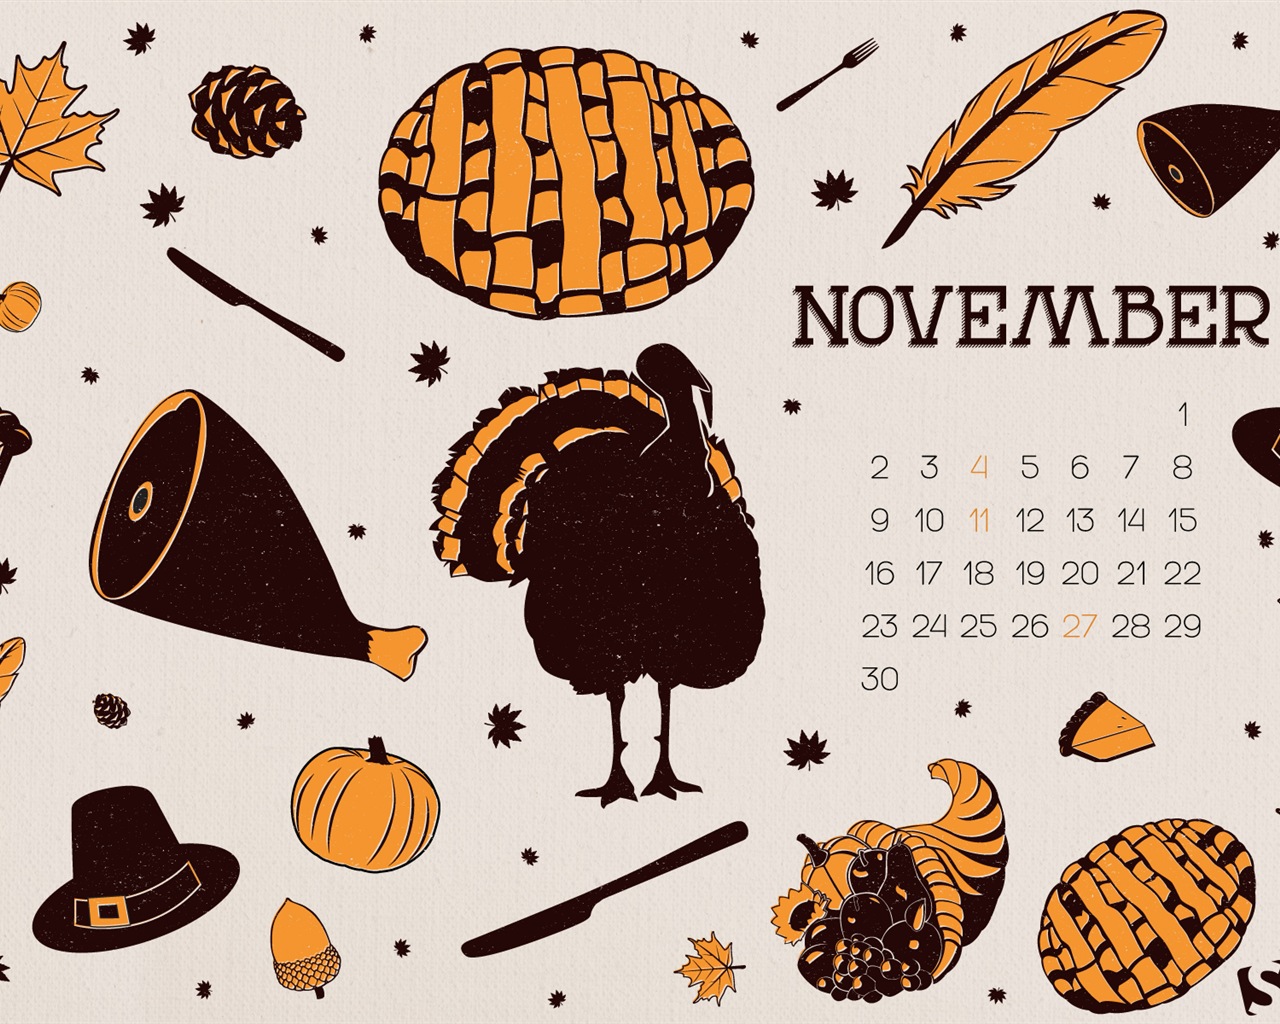 November 2014 Calendar wallpaper(2) #14 - 1280x1024